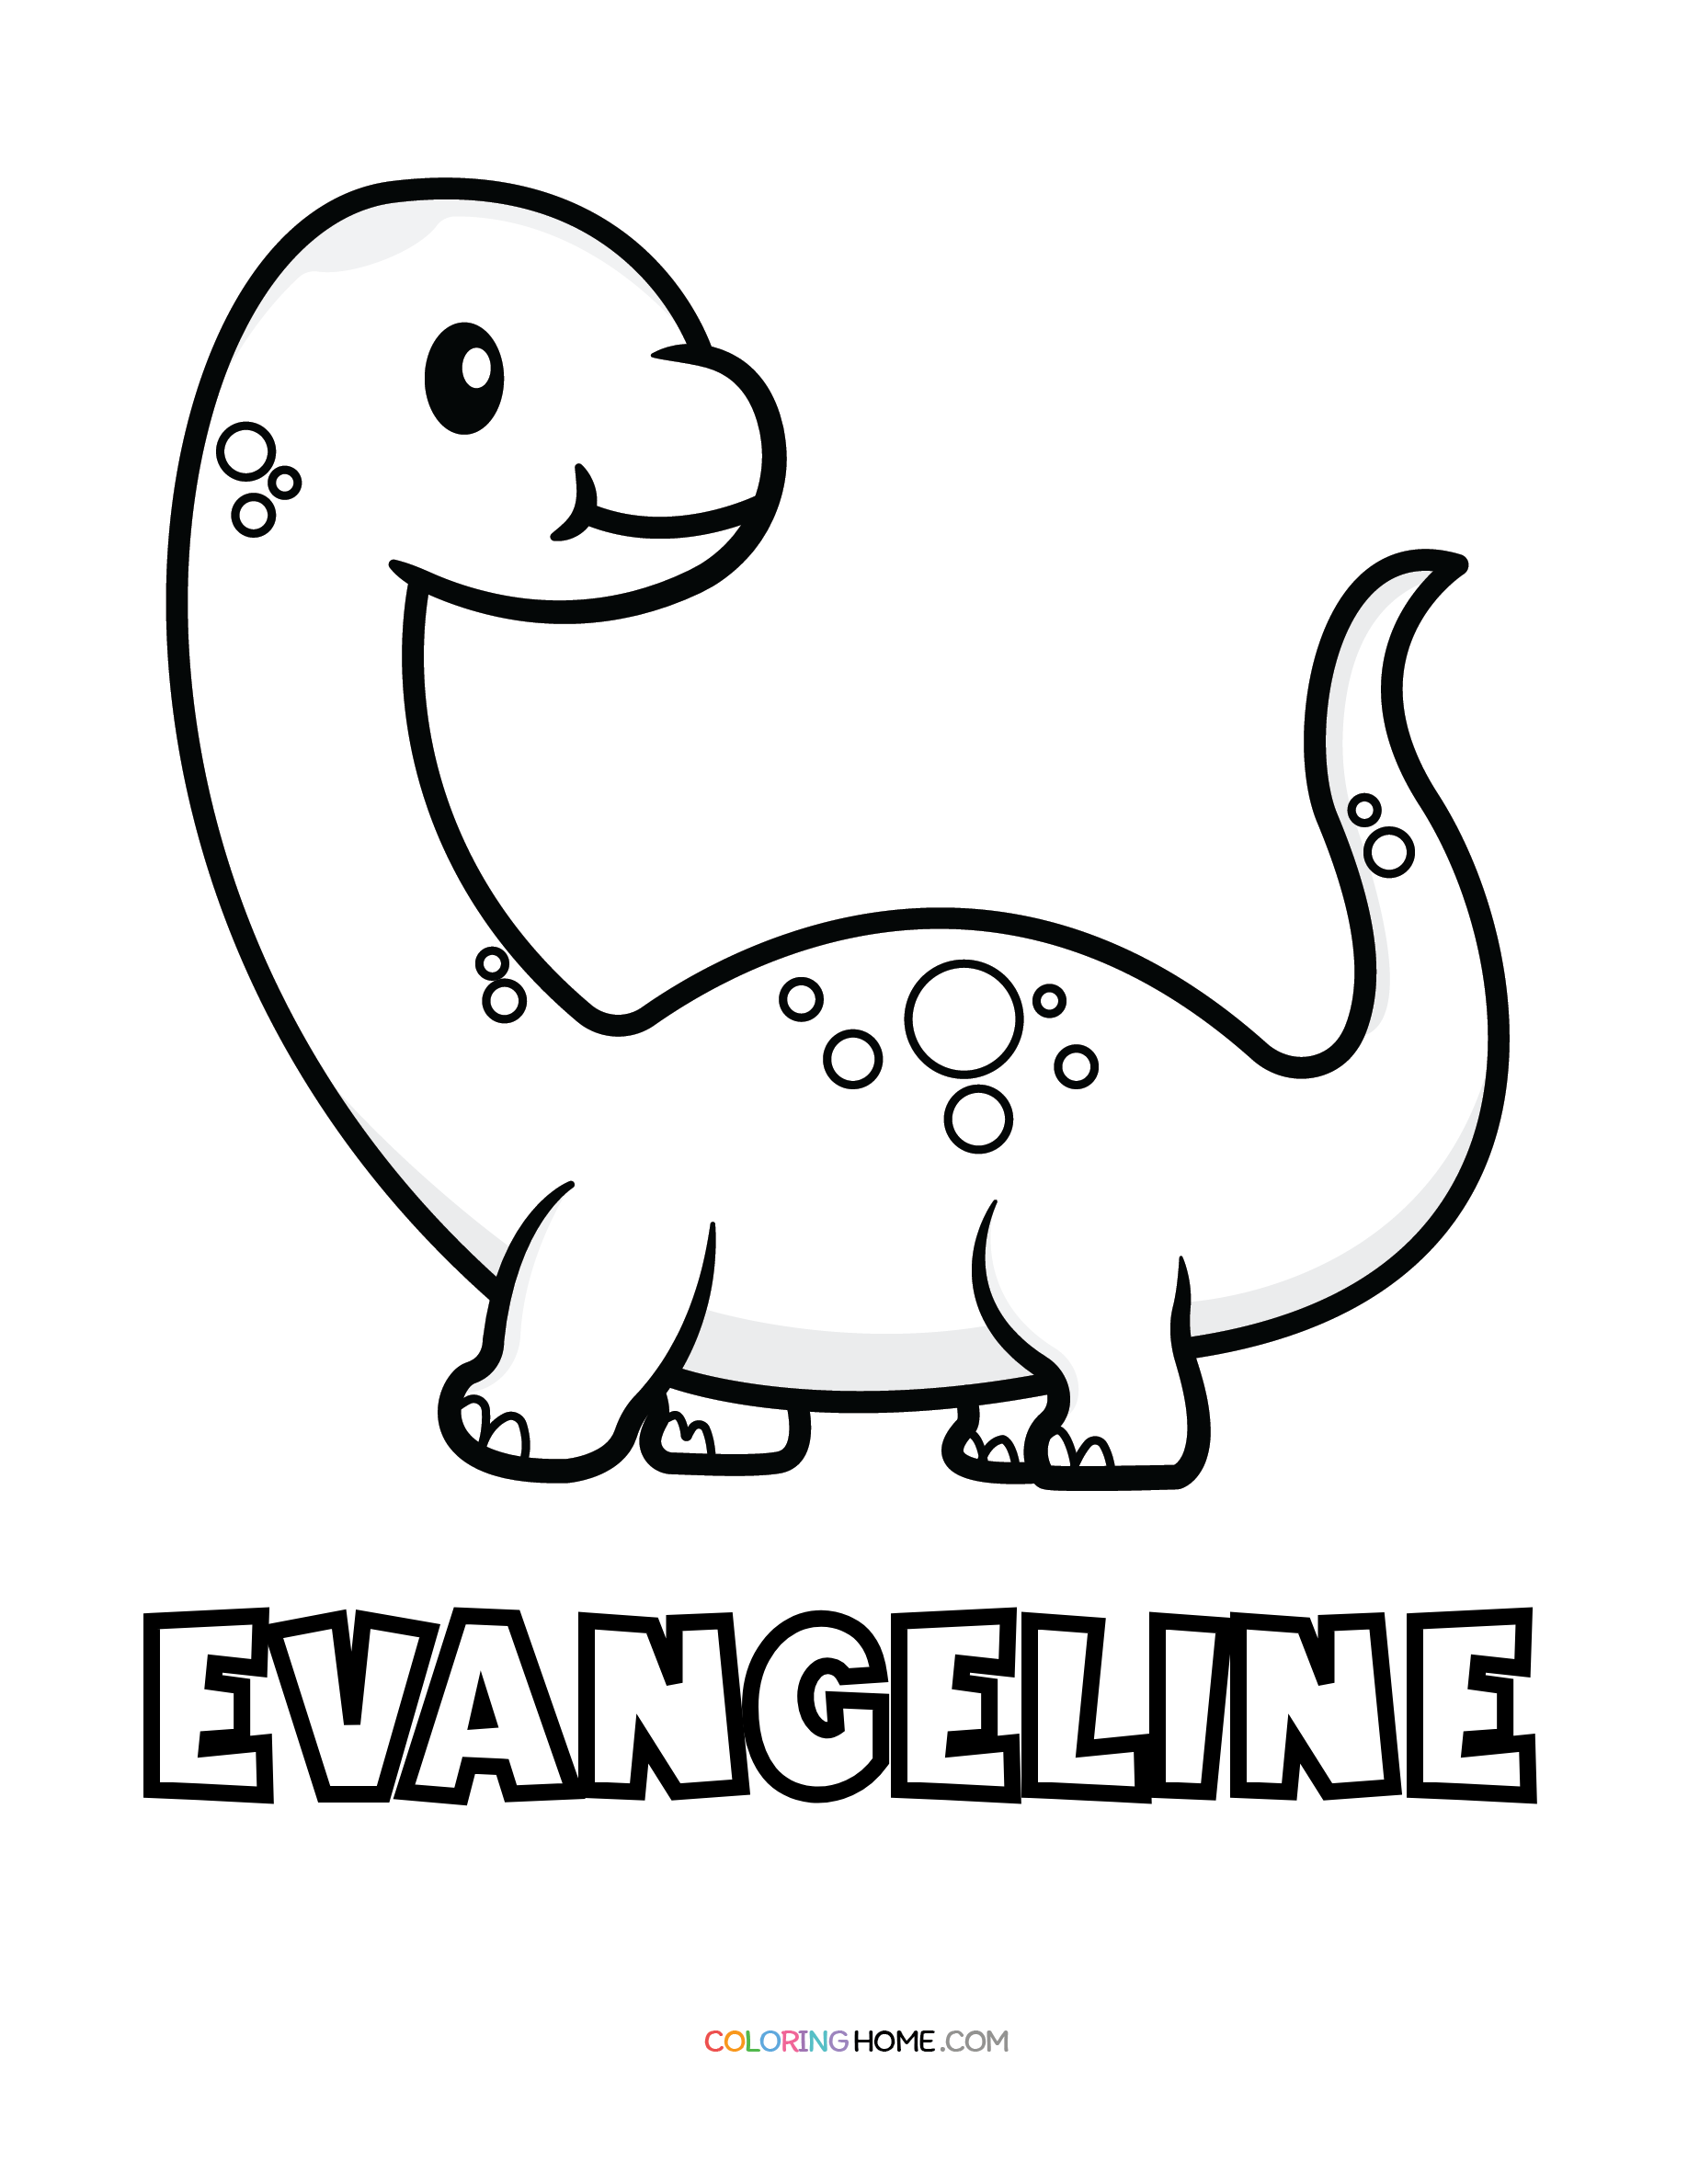 Evangeline dinosaur coloring page